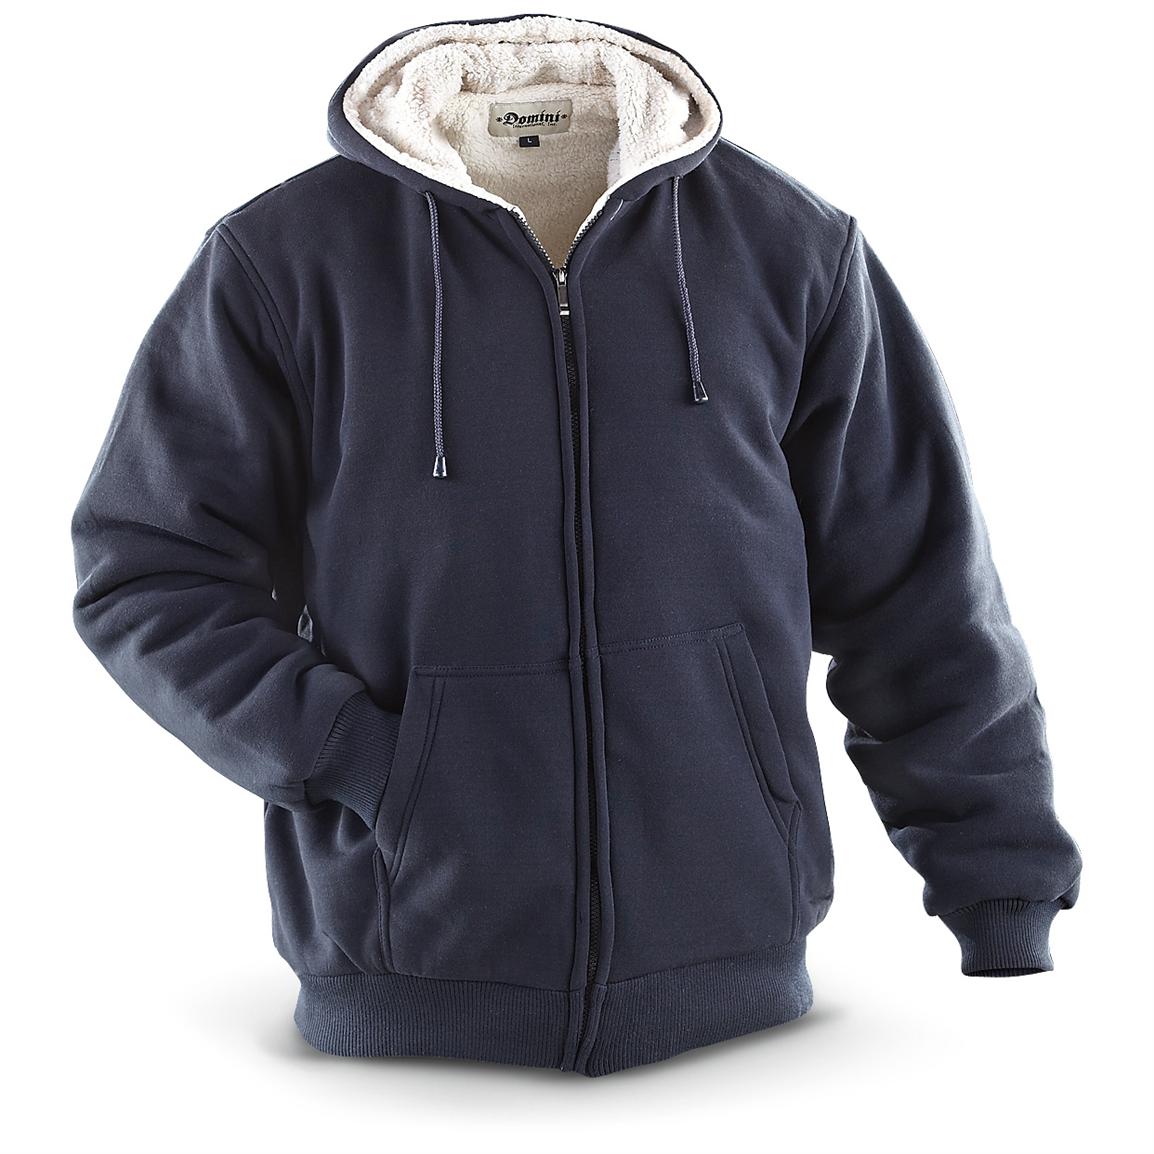 Domini Fleece - lined Hooded Jacket - 233428, Sweatshirts & Hoodies at ...